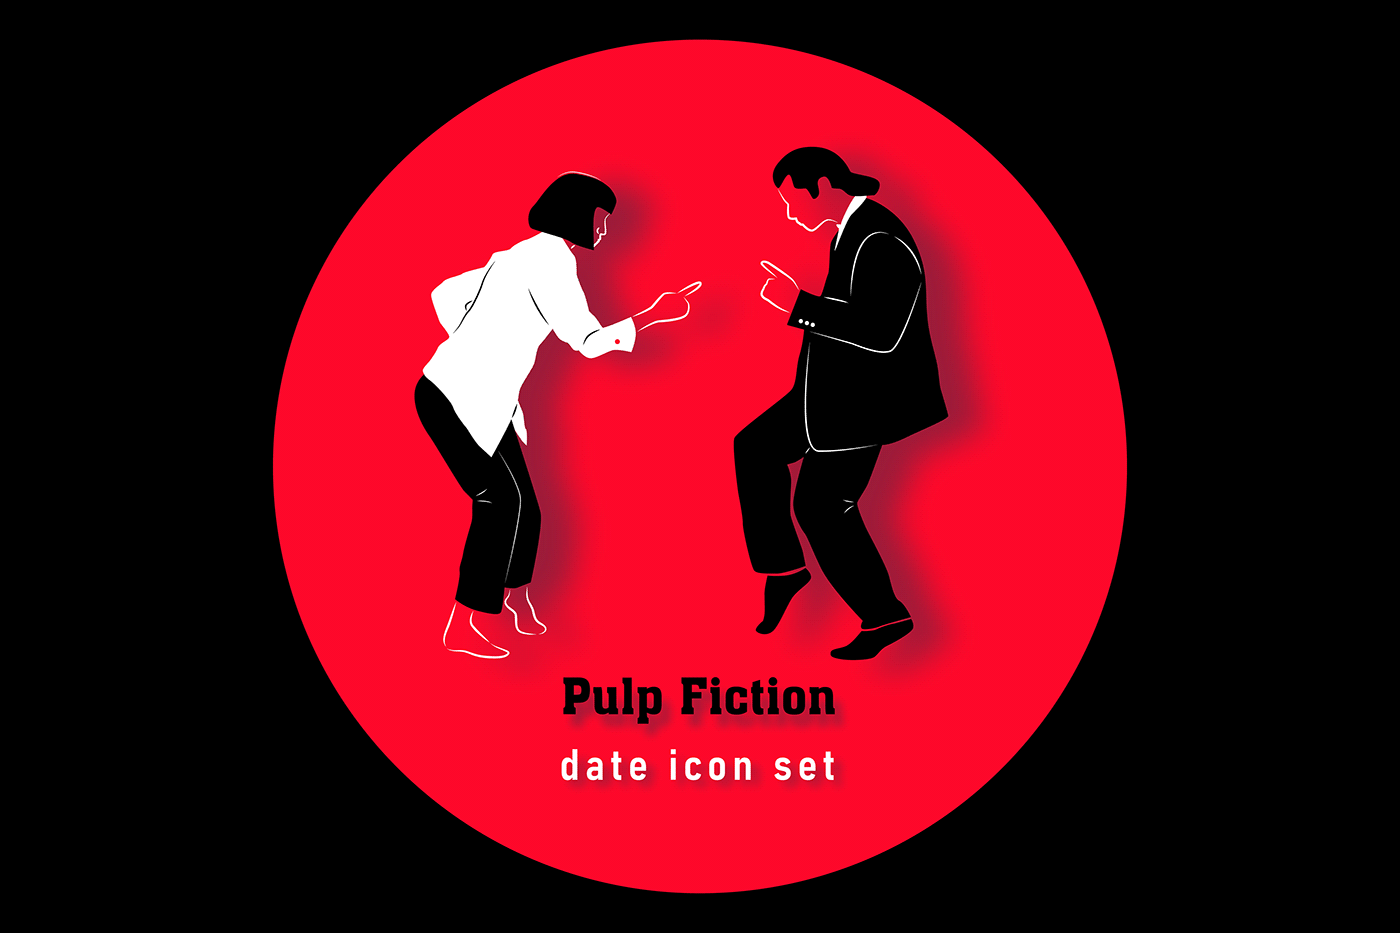 Pulp Fiction date icon set